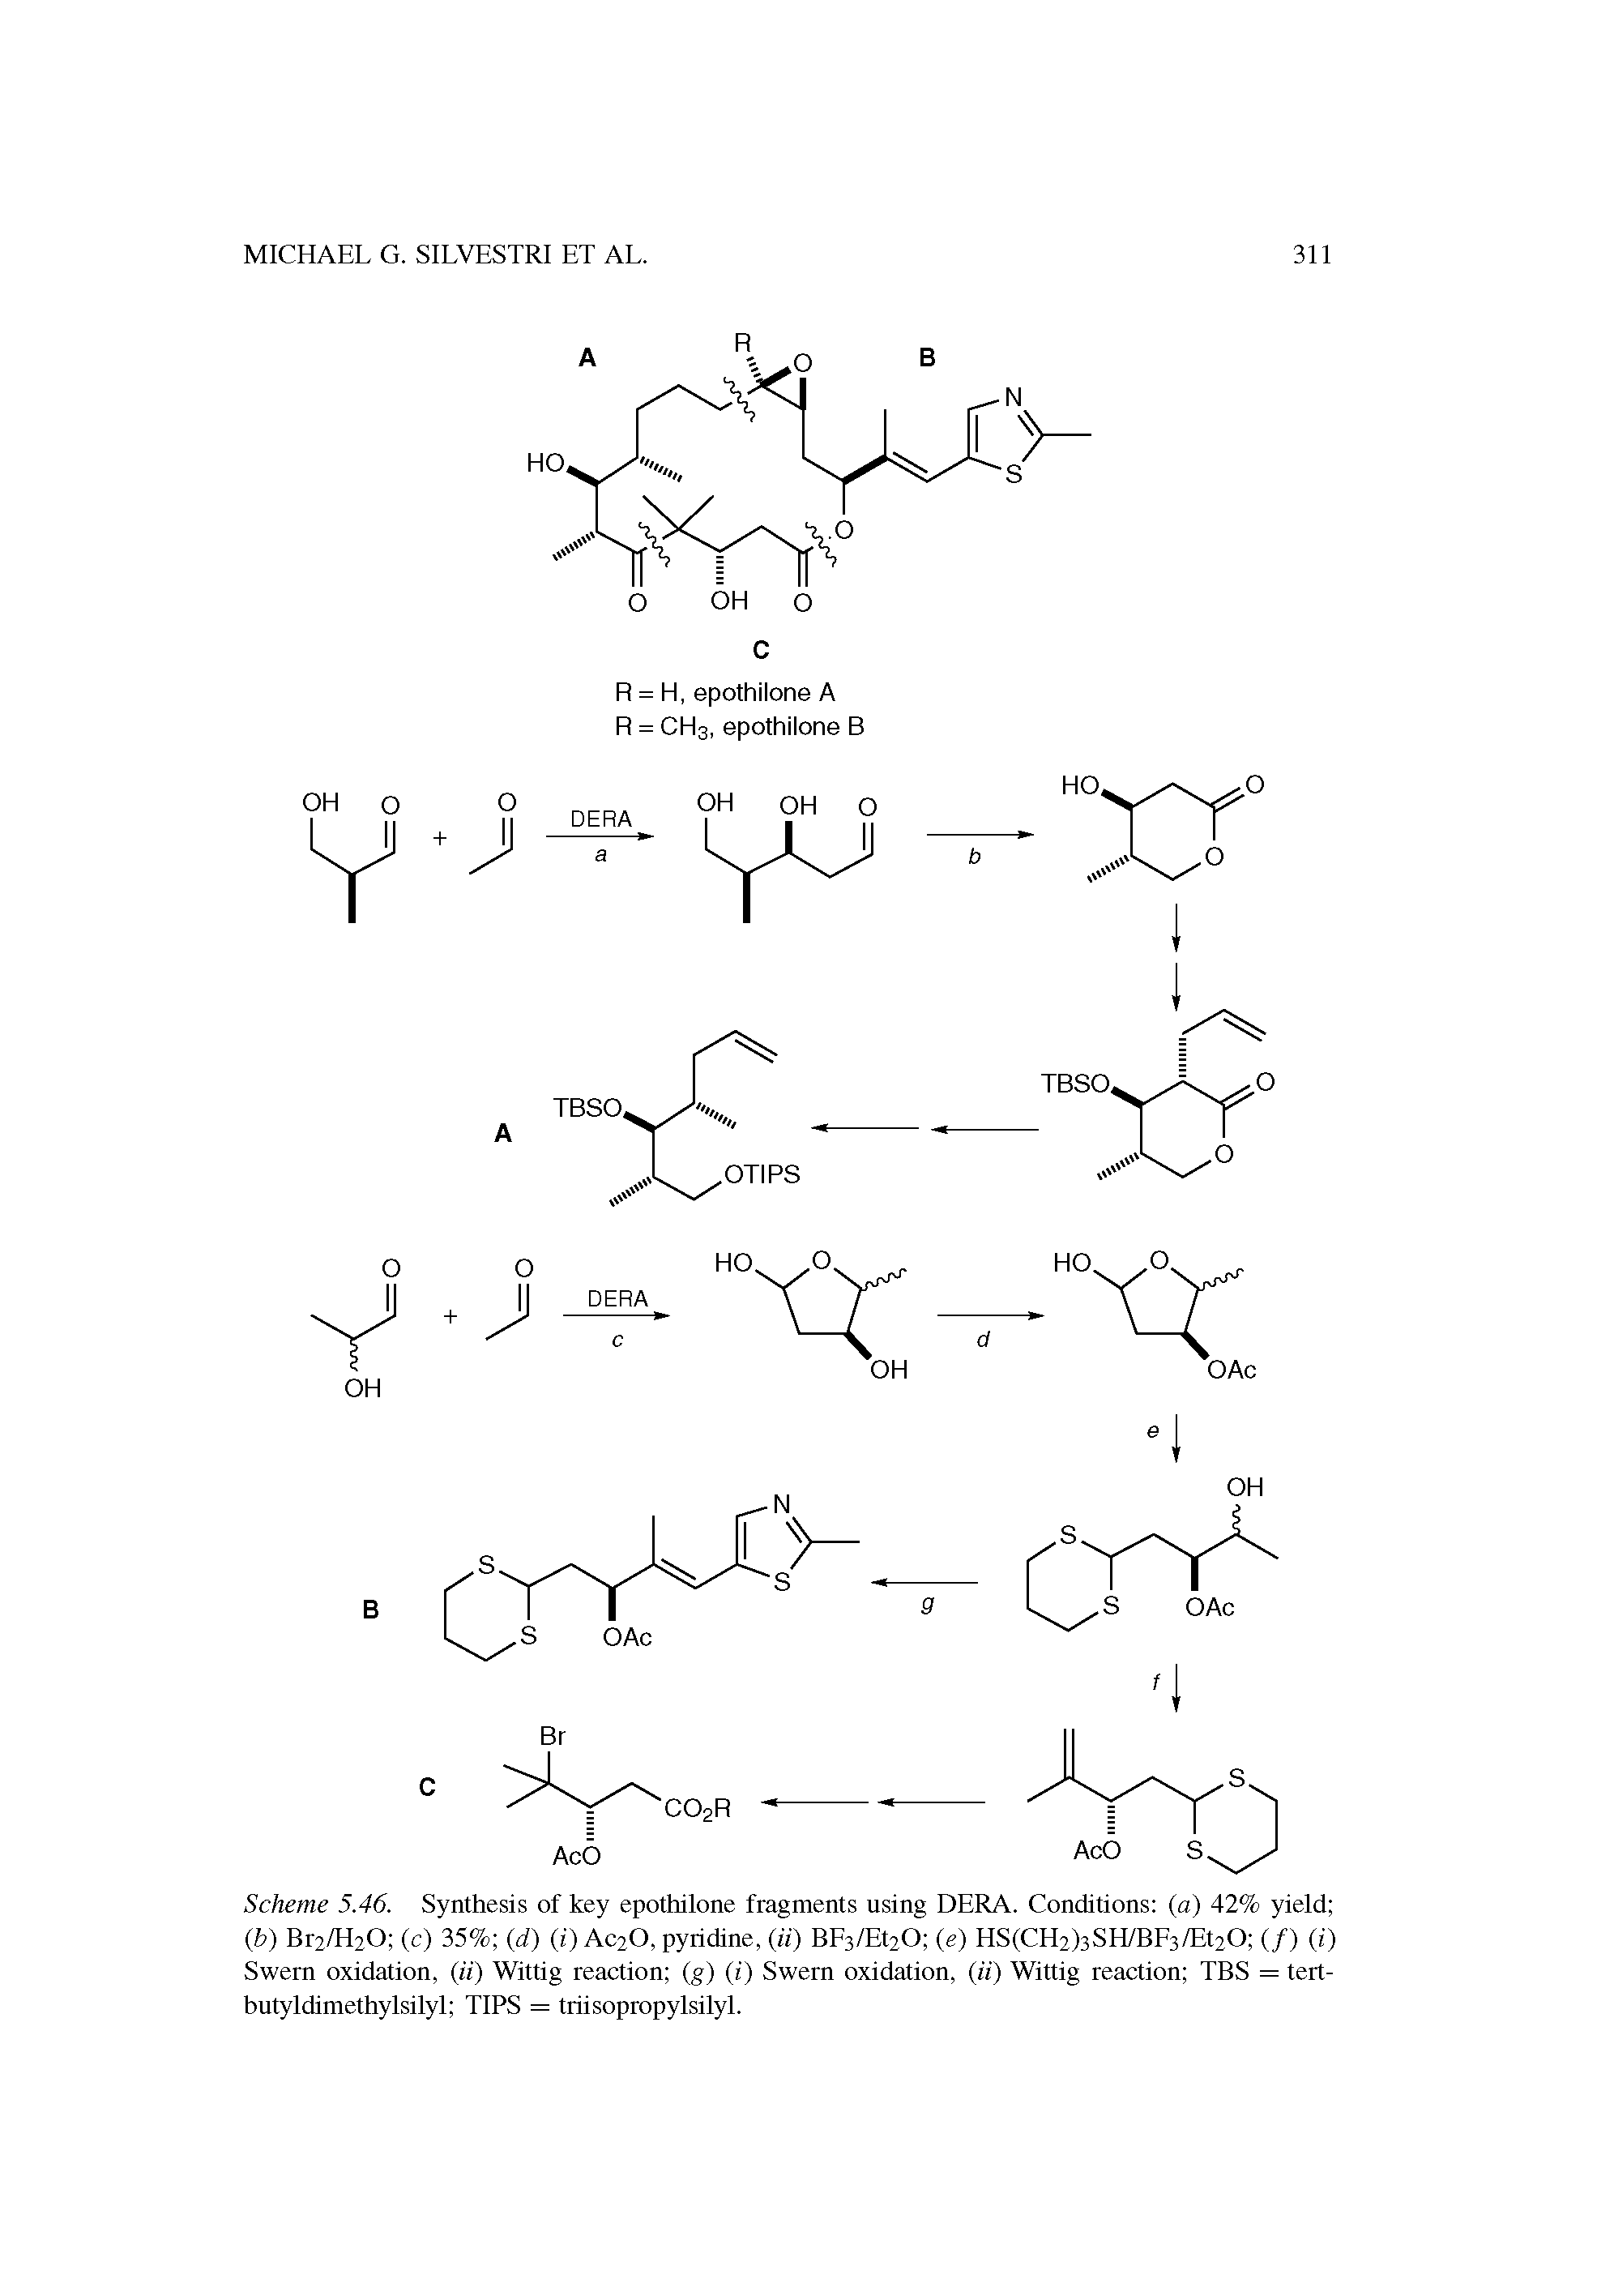 Scheme 5.46. Synthesis of key epothilone fragments using DERA. Conditions (a) 42% yield (b) Br2/H20 (c) 35% (d) (i) Ac20, pyridine, (ii) BF3/Et20 (e) HS(CH2)3SH/BF3/Et20 (/) (i) Swern oxidation, (ii) Wittig reaction (g) (i) Swern oxidation, (ii) Wittig reaction TBS = tert-butyldimethylsilyl TIPS = triisopropylsilyl.